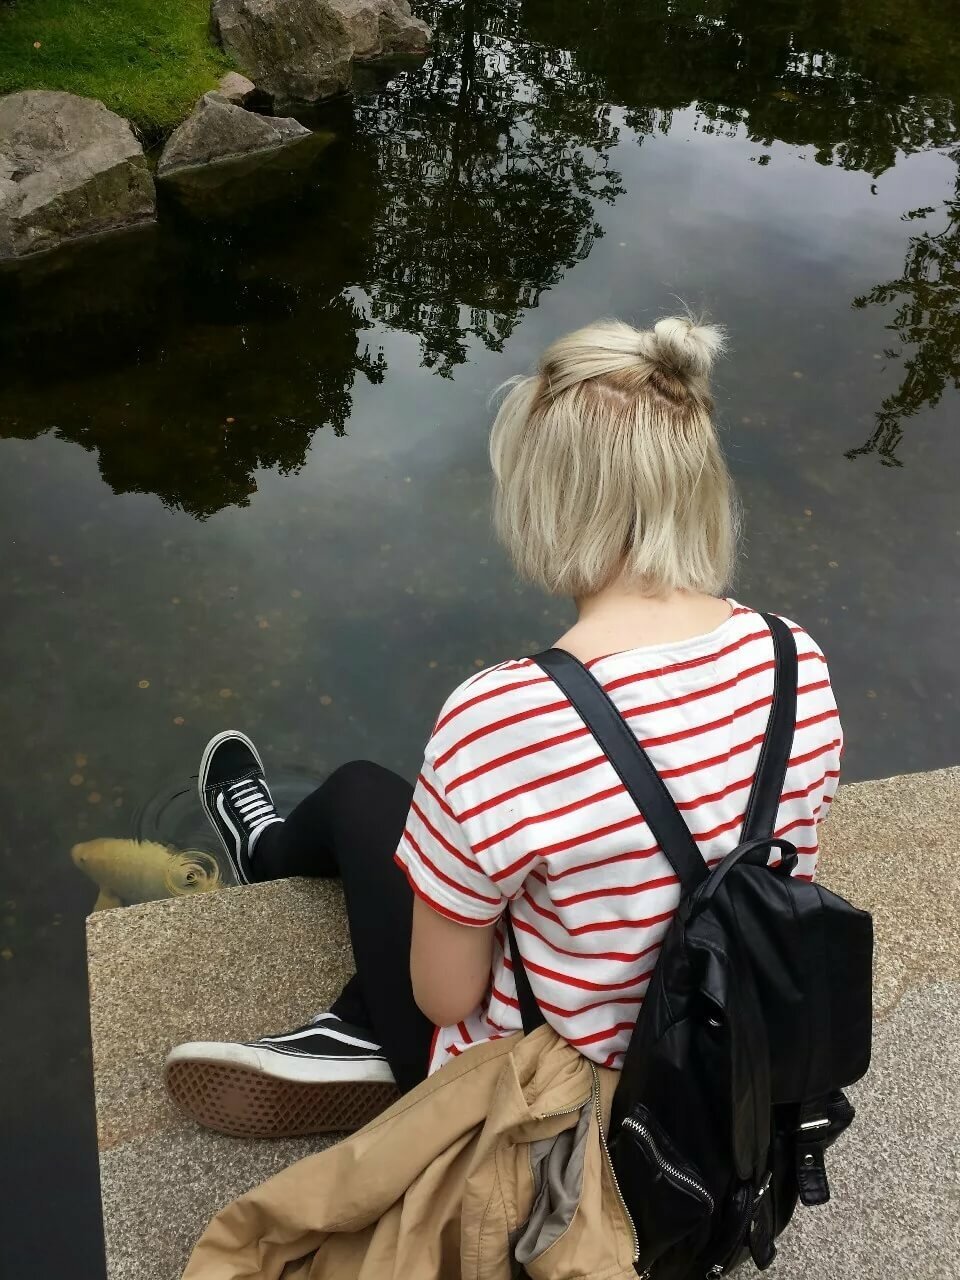 Фото девушки блондинка со спины с короткими волосами